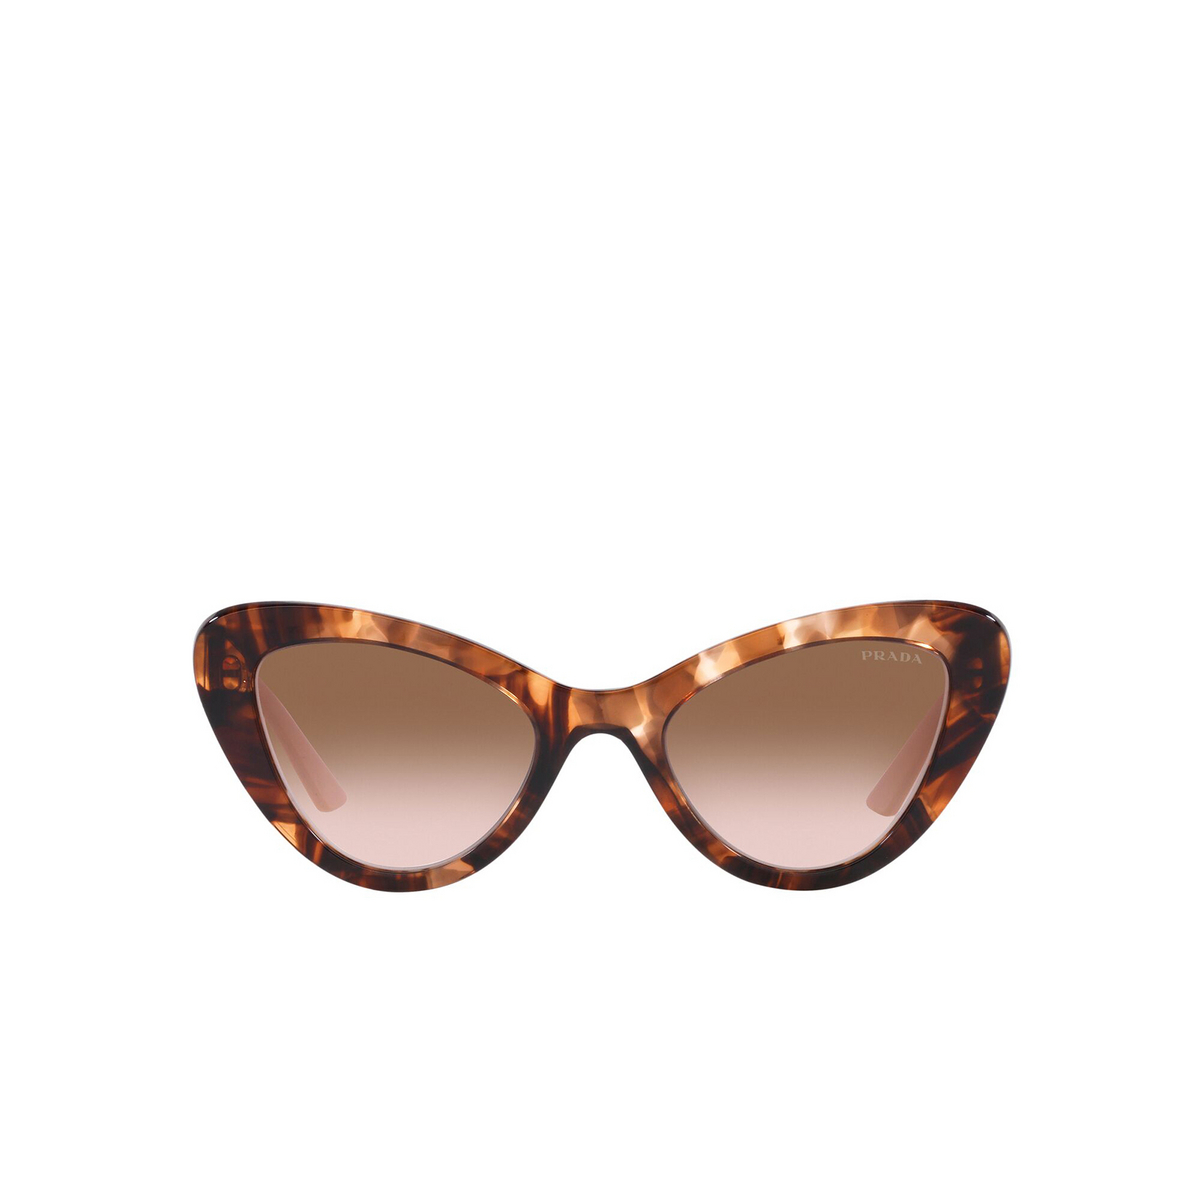 Prada® Cat-eye Sunglasses: PR 13YS color Havana 07R0A6 - front view.